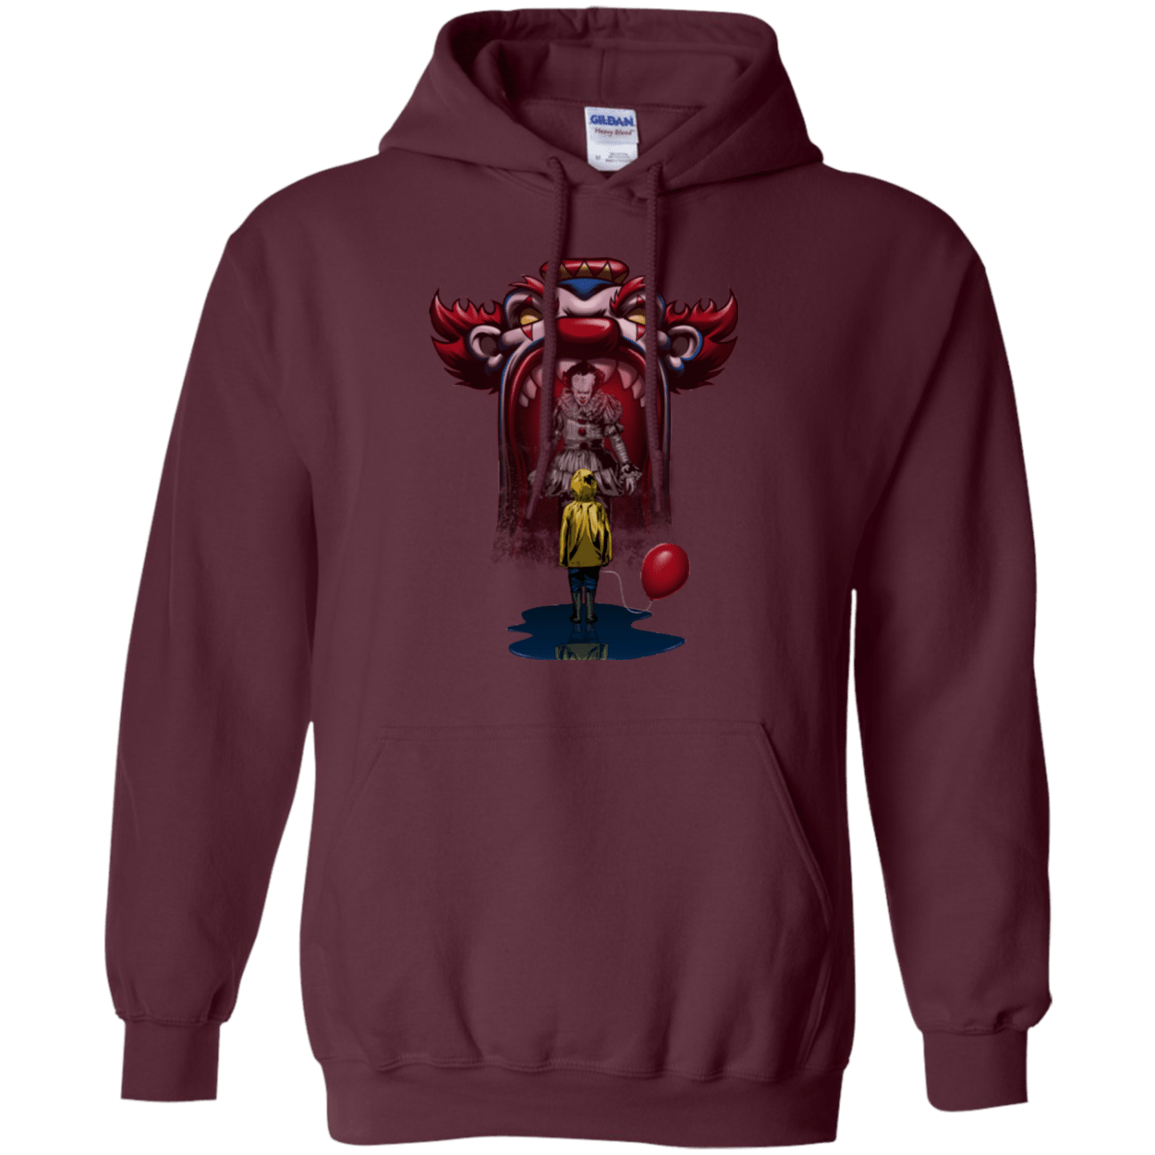 Sweatshirts Maroon / Small It Can Be Fun Pullover Hoodie